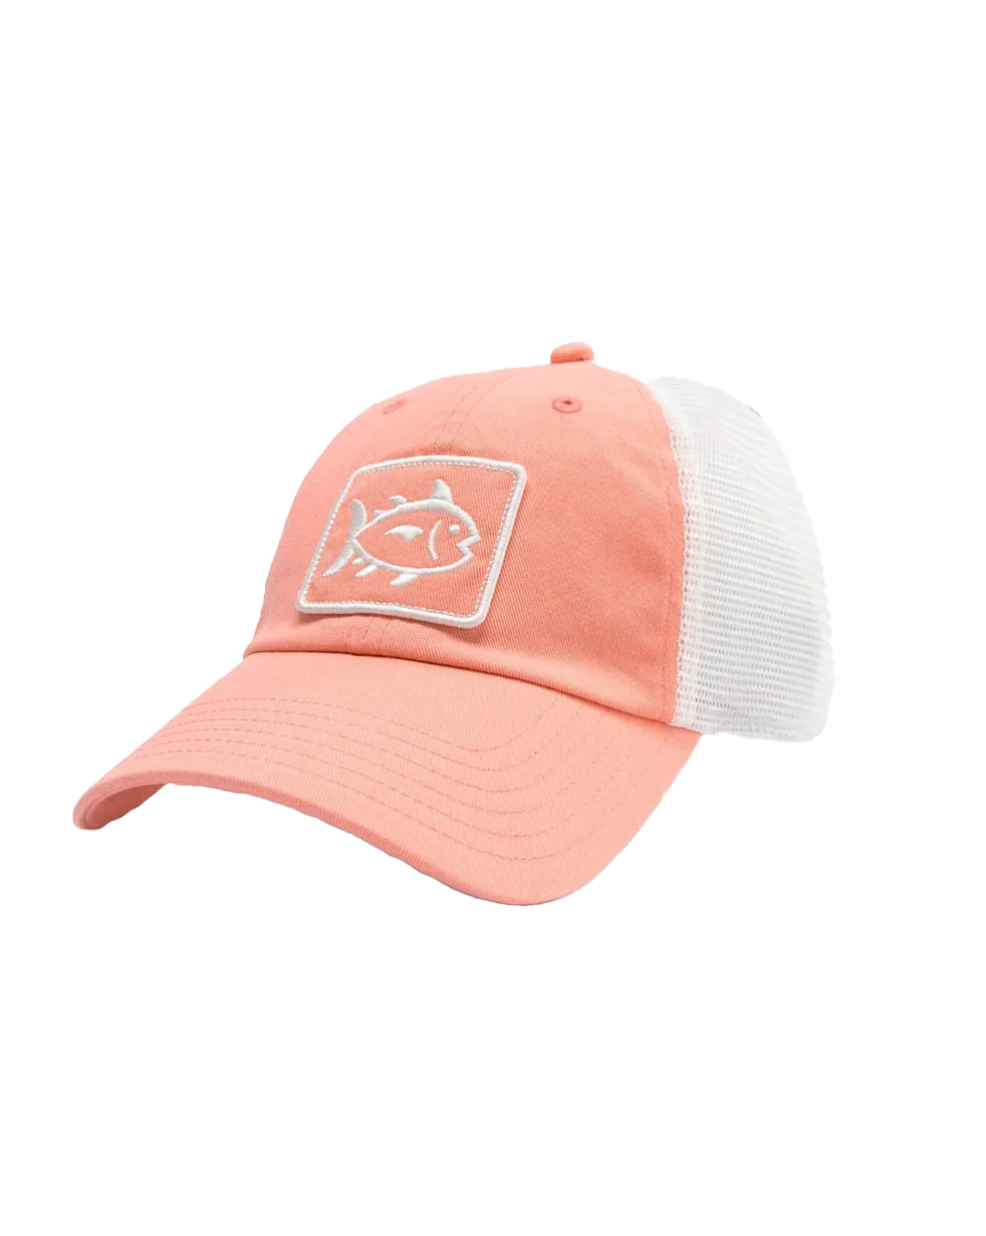 SJ Fly Patch Sun Farer Trucker Hat Apricot Blush Coral